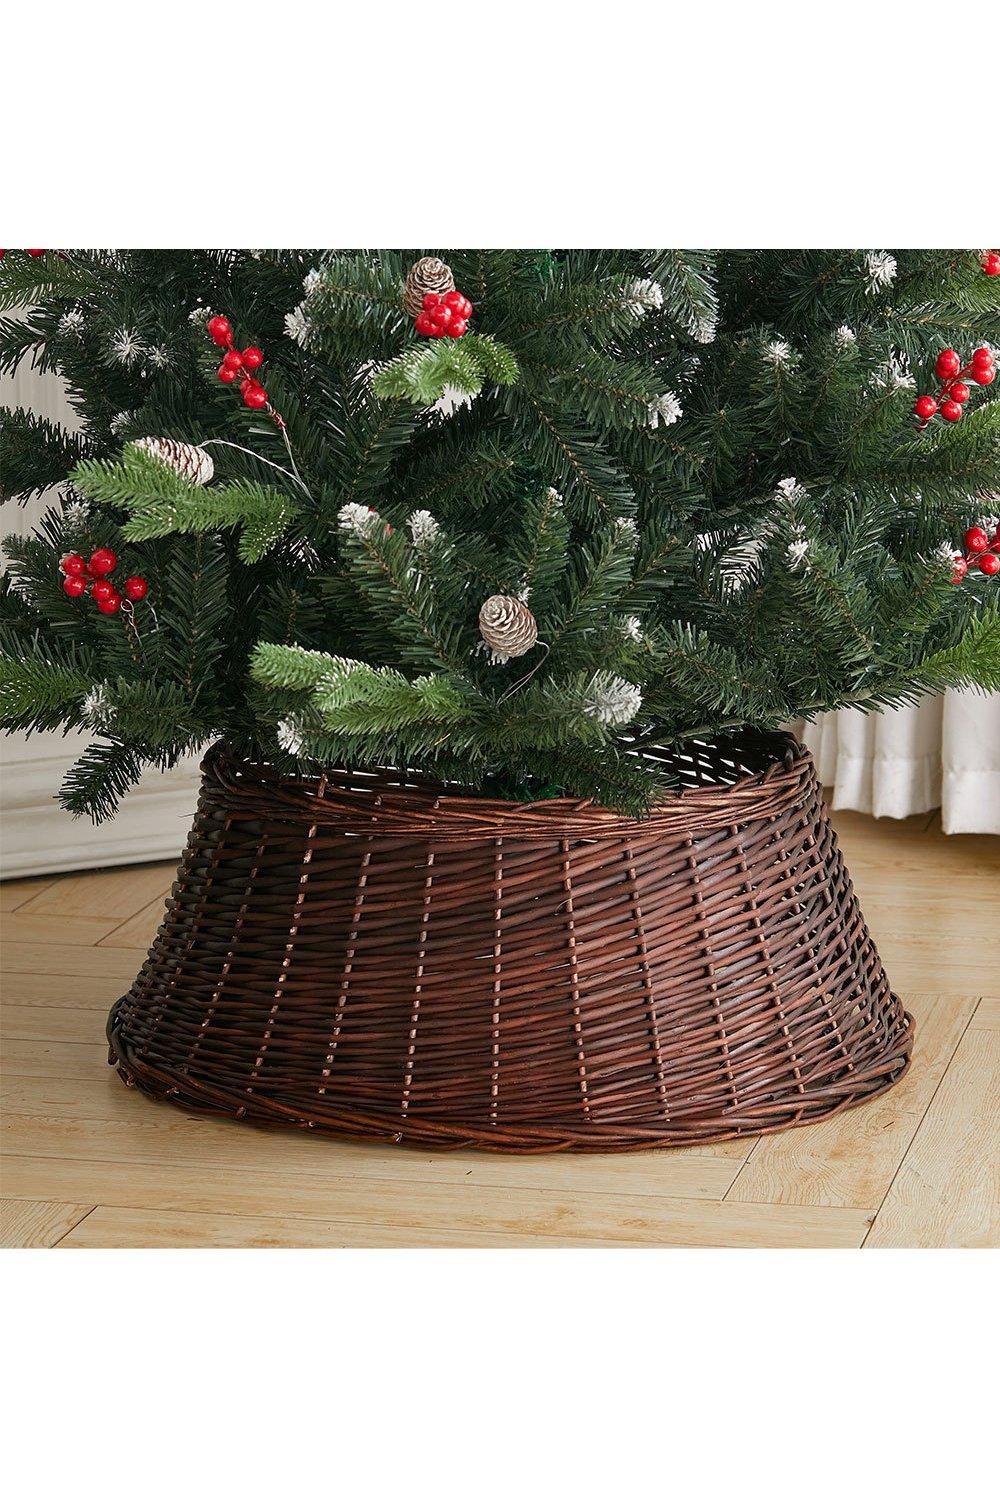 Wicker Christmas Tree Collar Skirt Rattan Xmas Tree Basket Ring Base